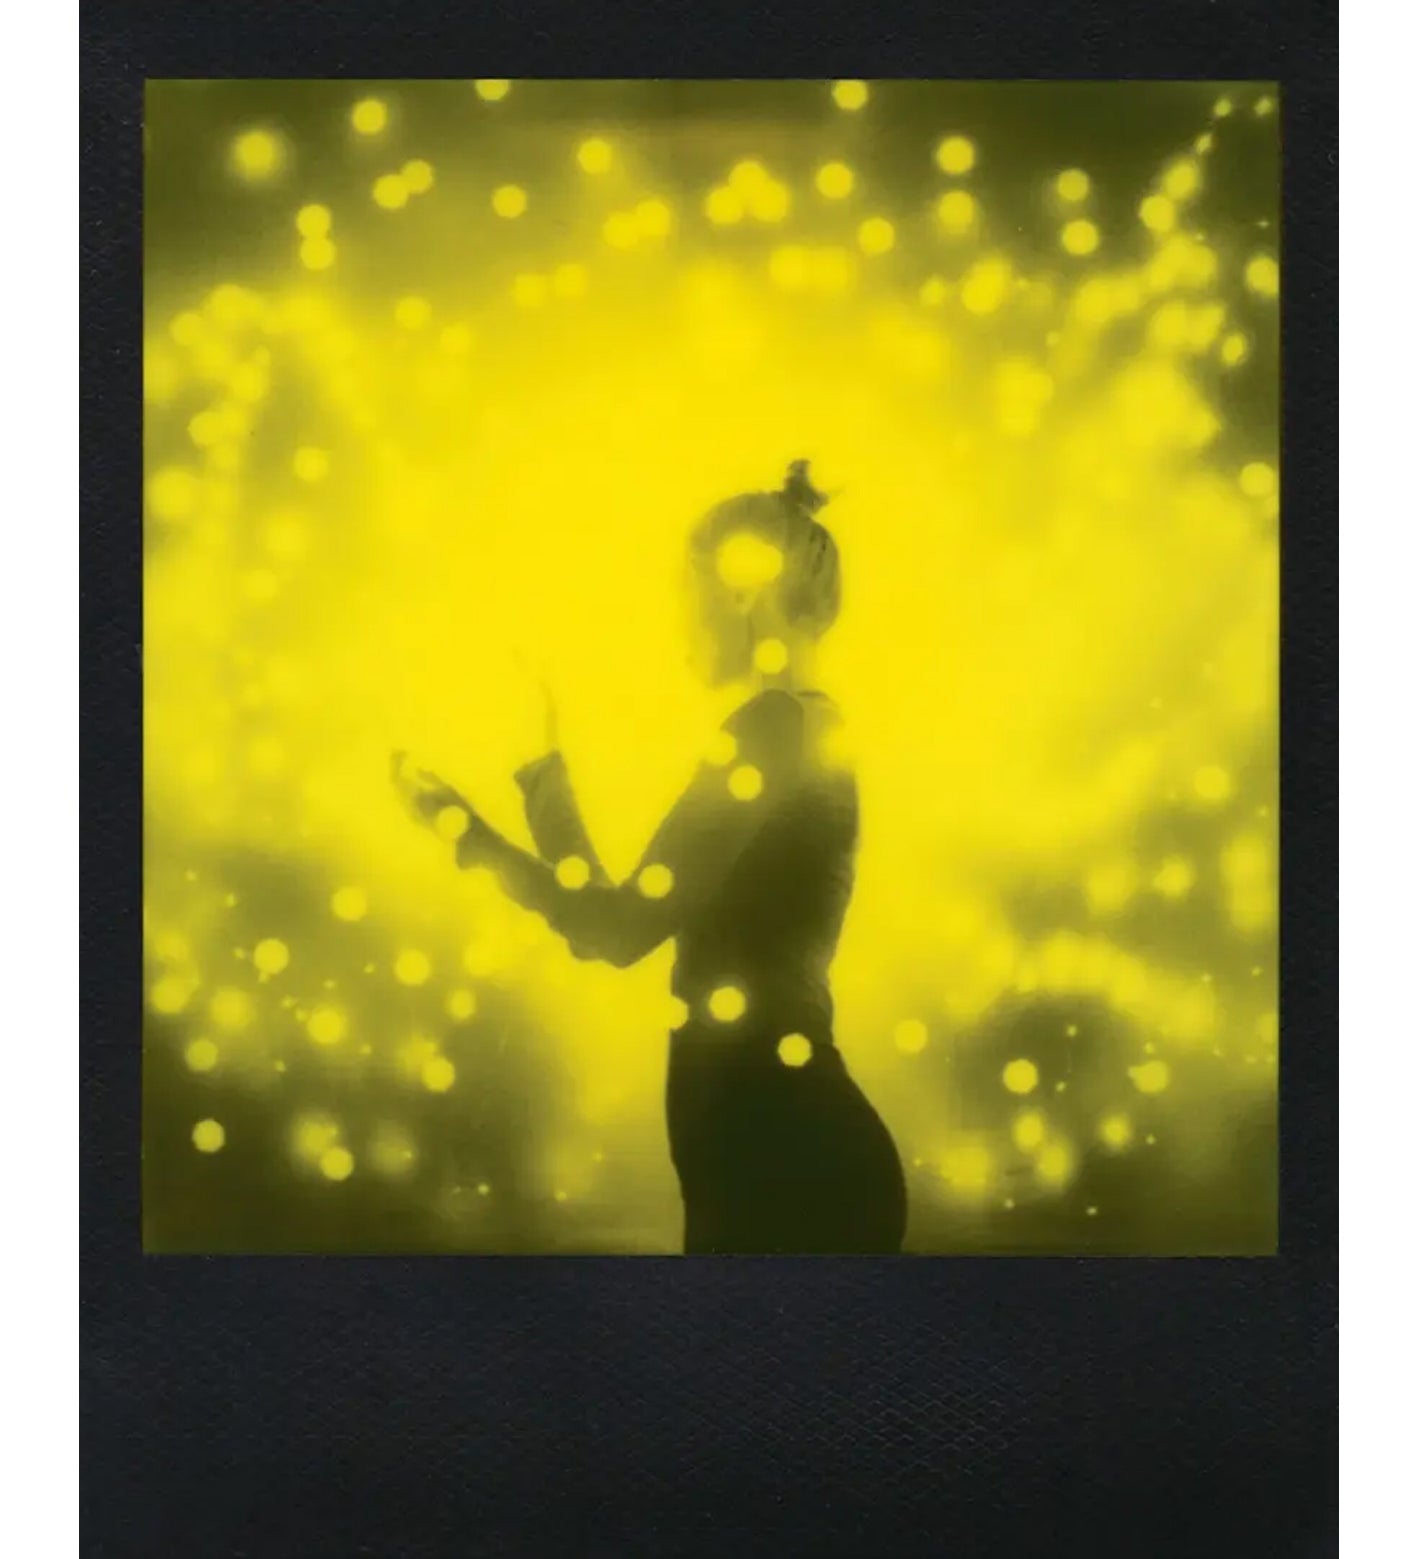 Polaroid Black & Yellow 600 Duochrome Edition Instant Film (£20.99 incl VAT)